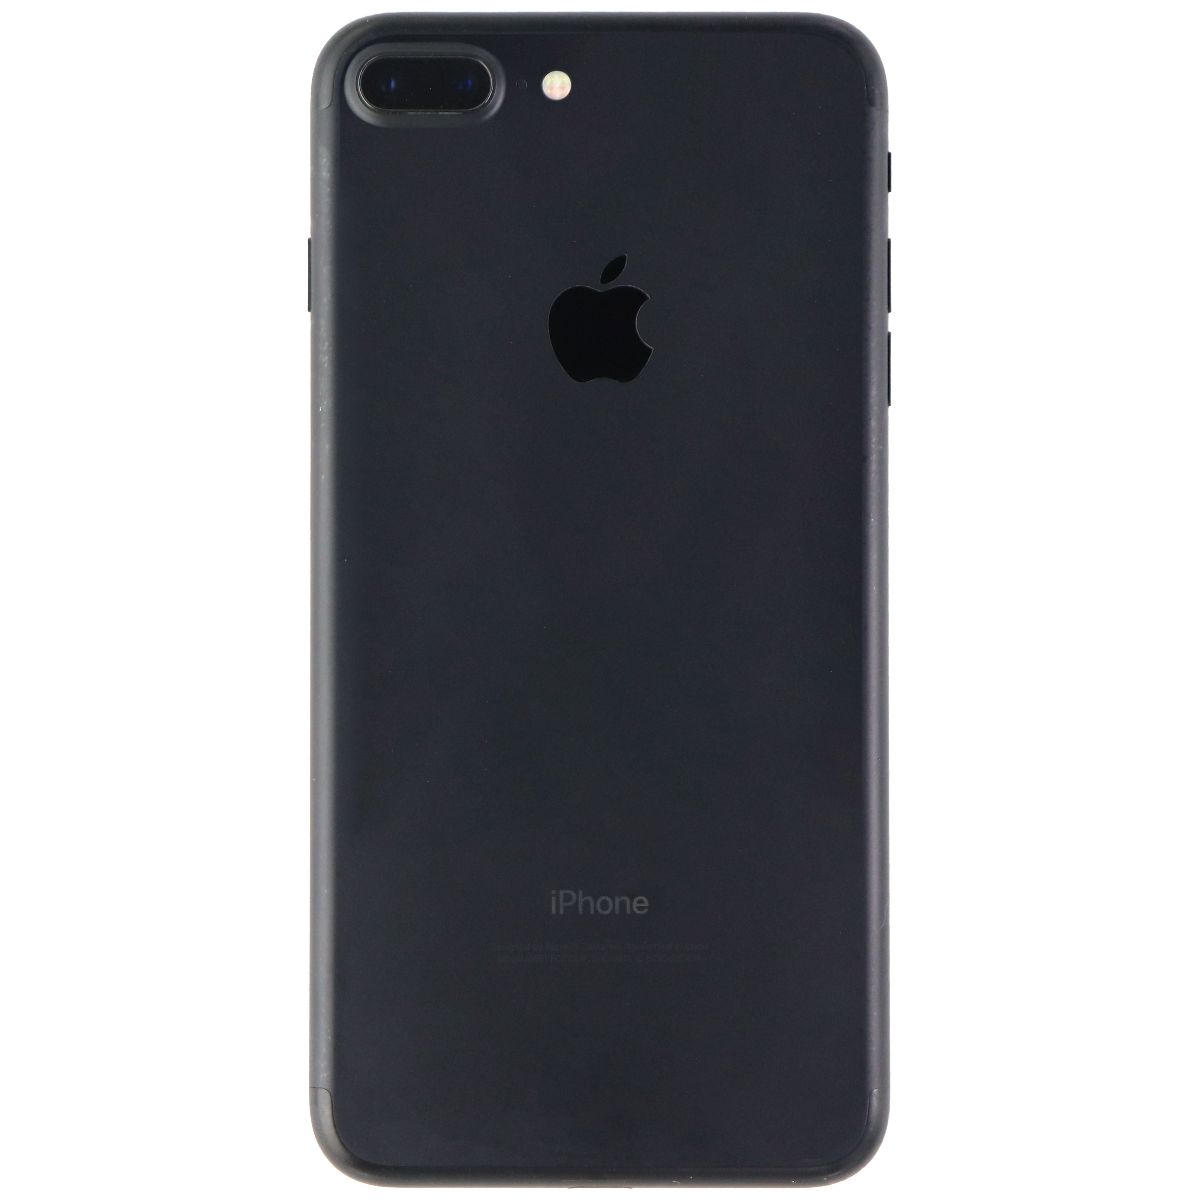 Apple iPhone 7 Plus (5.5-inch) Smartphone (A1661) Unlocked - 32GB / Black